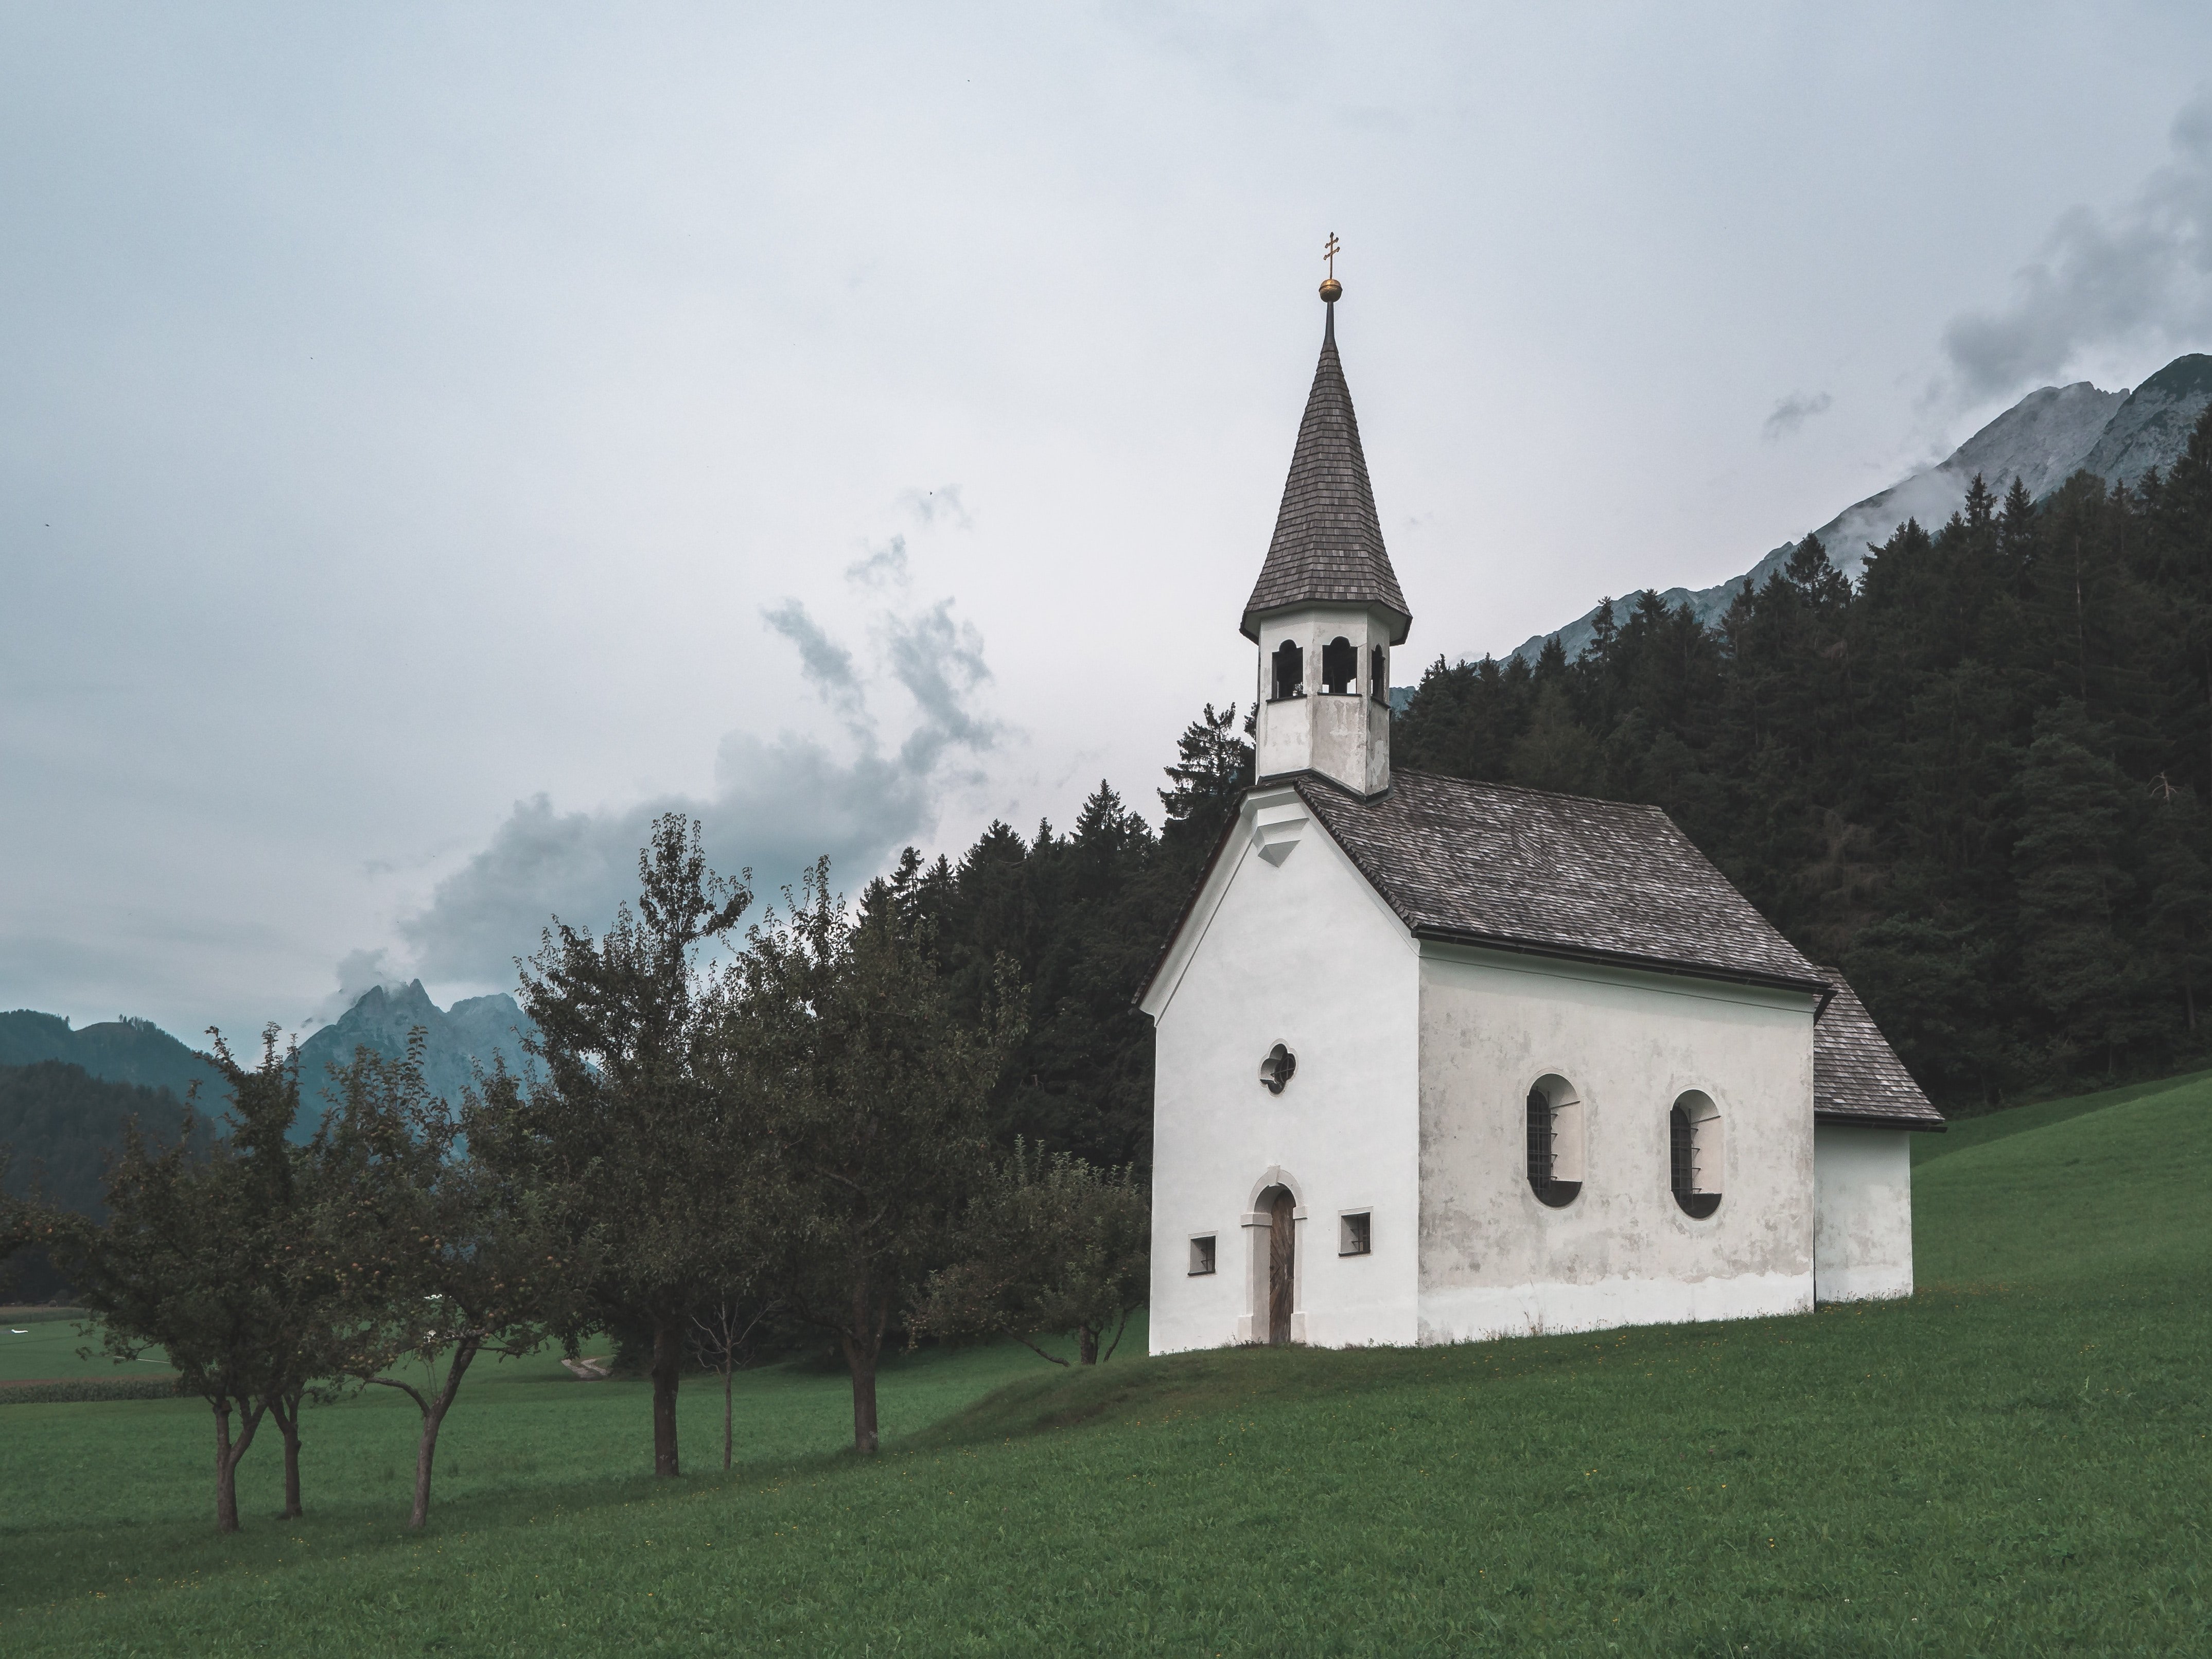 A church on a hill | Source: Unsplash.com